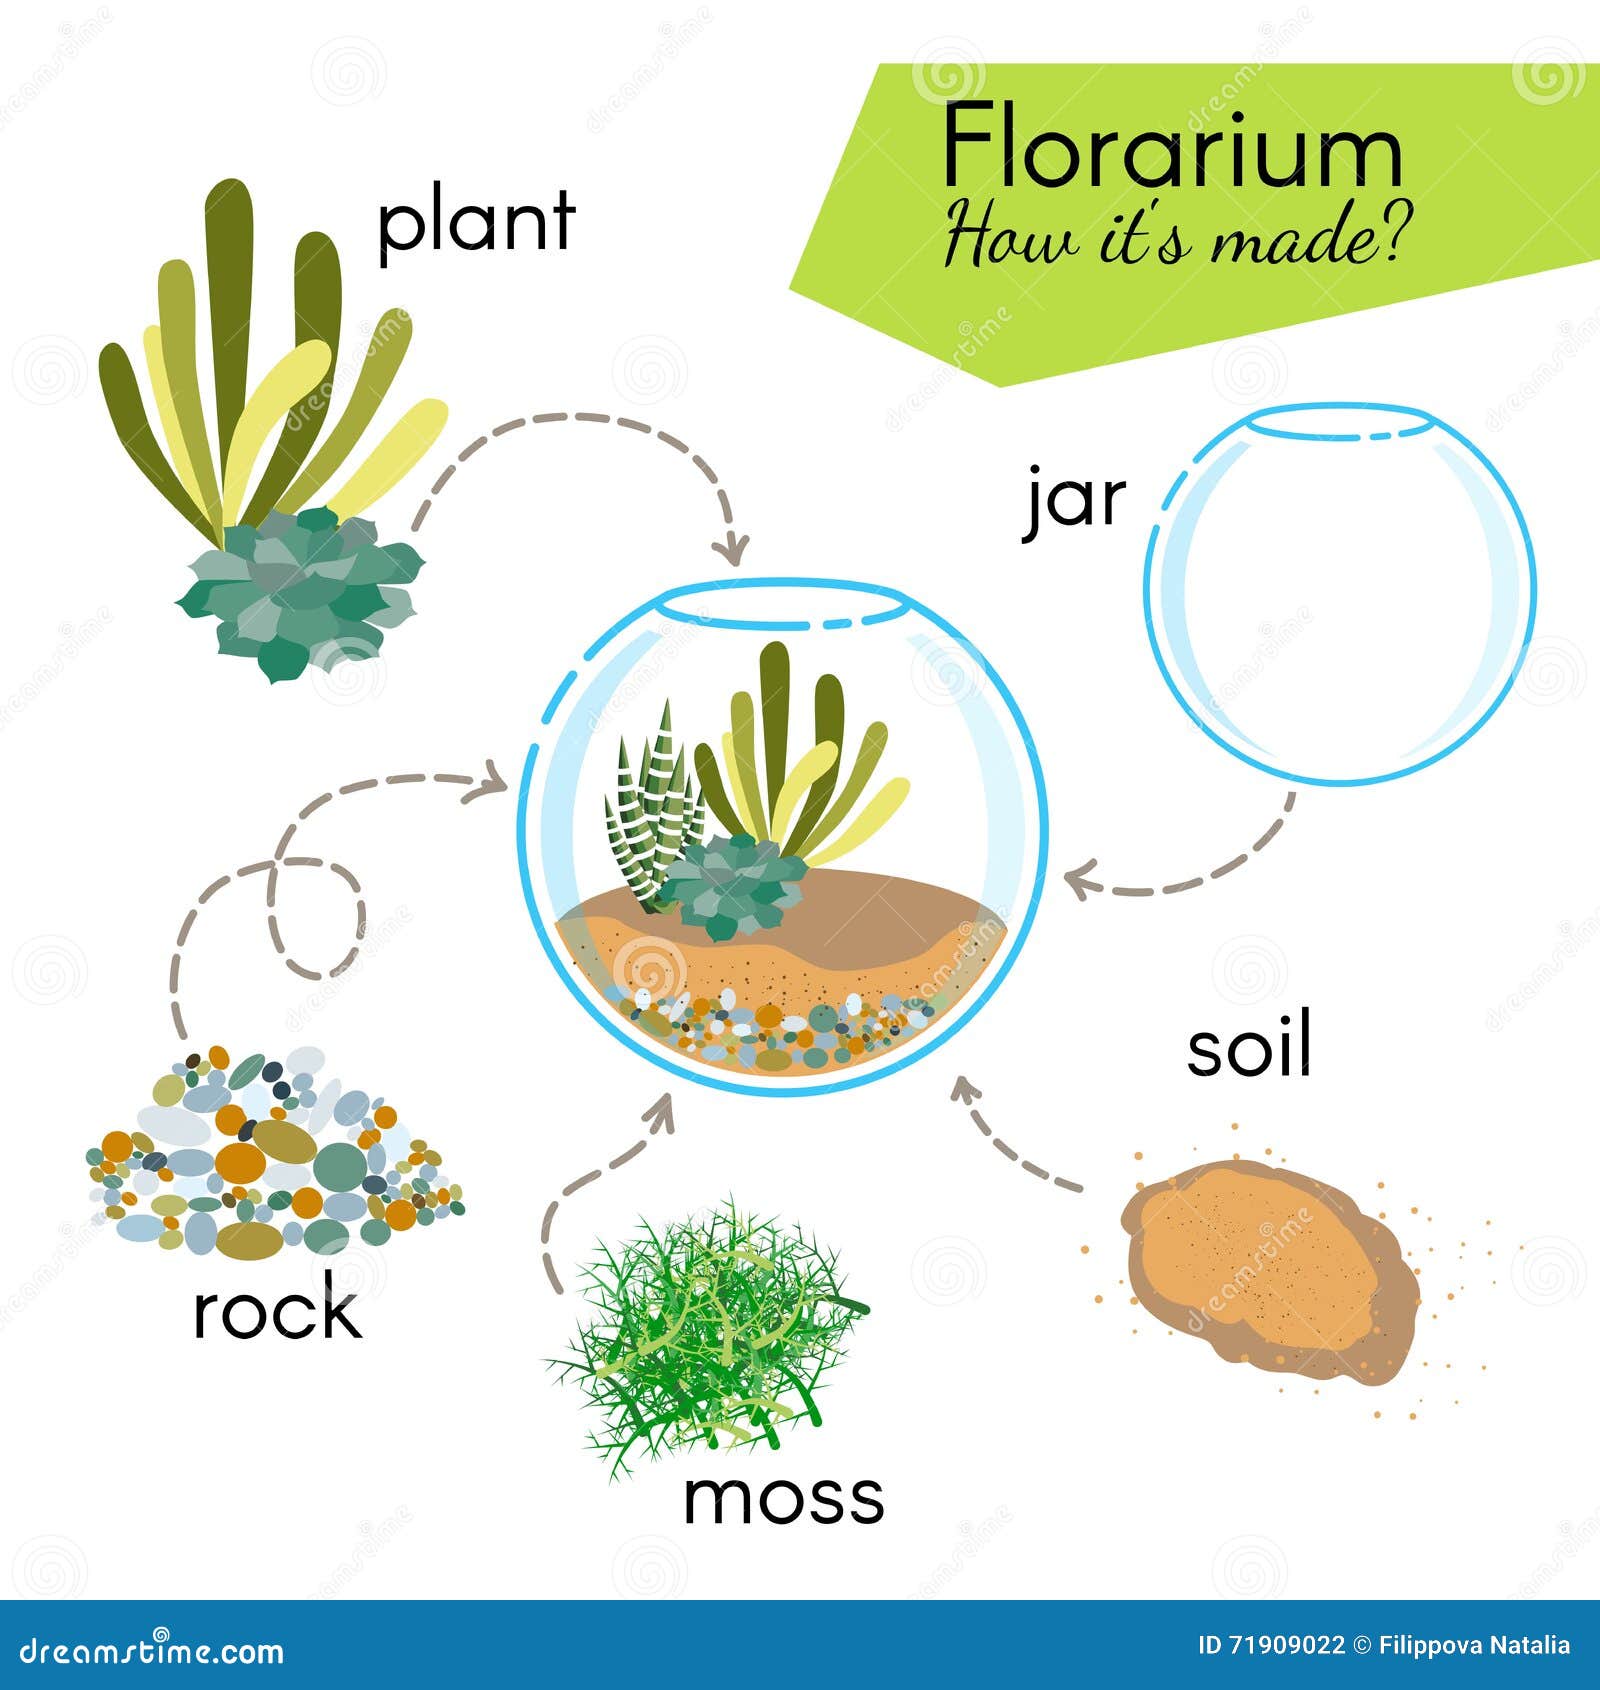 tutorial how to make florarium. succulents inside glass terrarium, s for florarium: jar, plant, rocks, moss, soil.